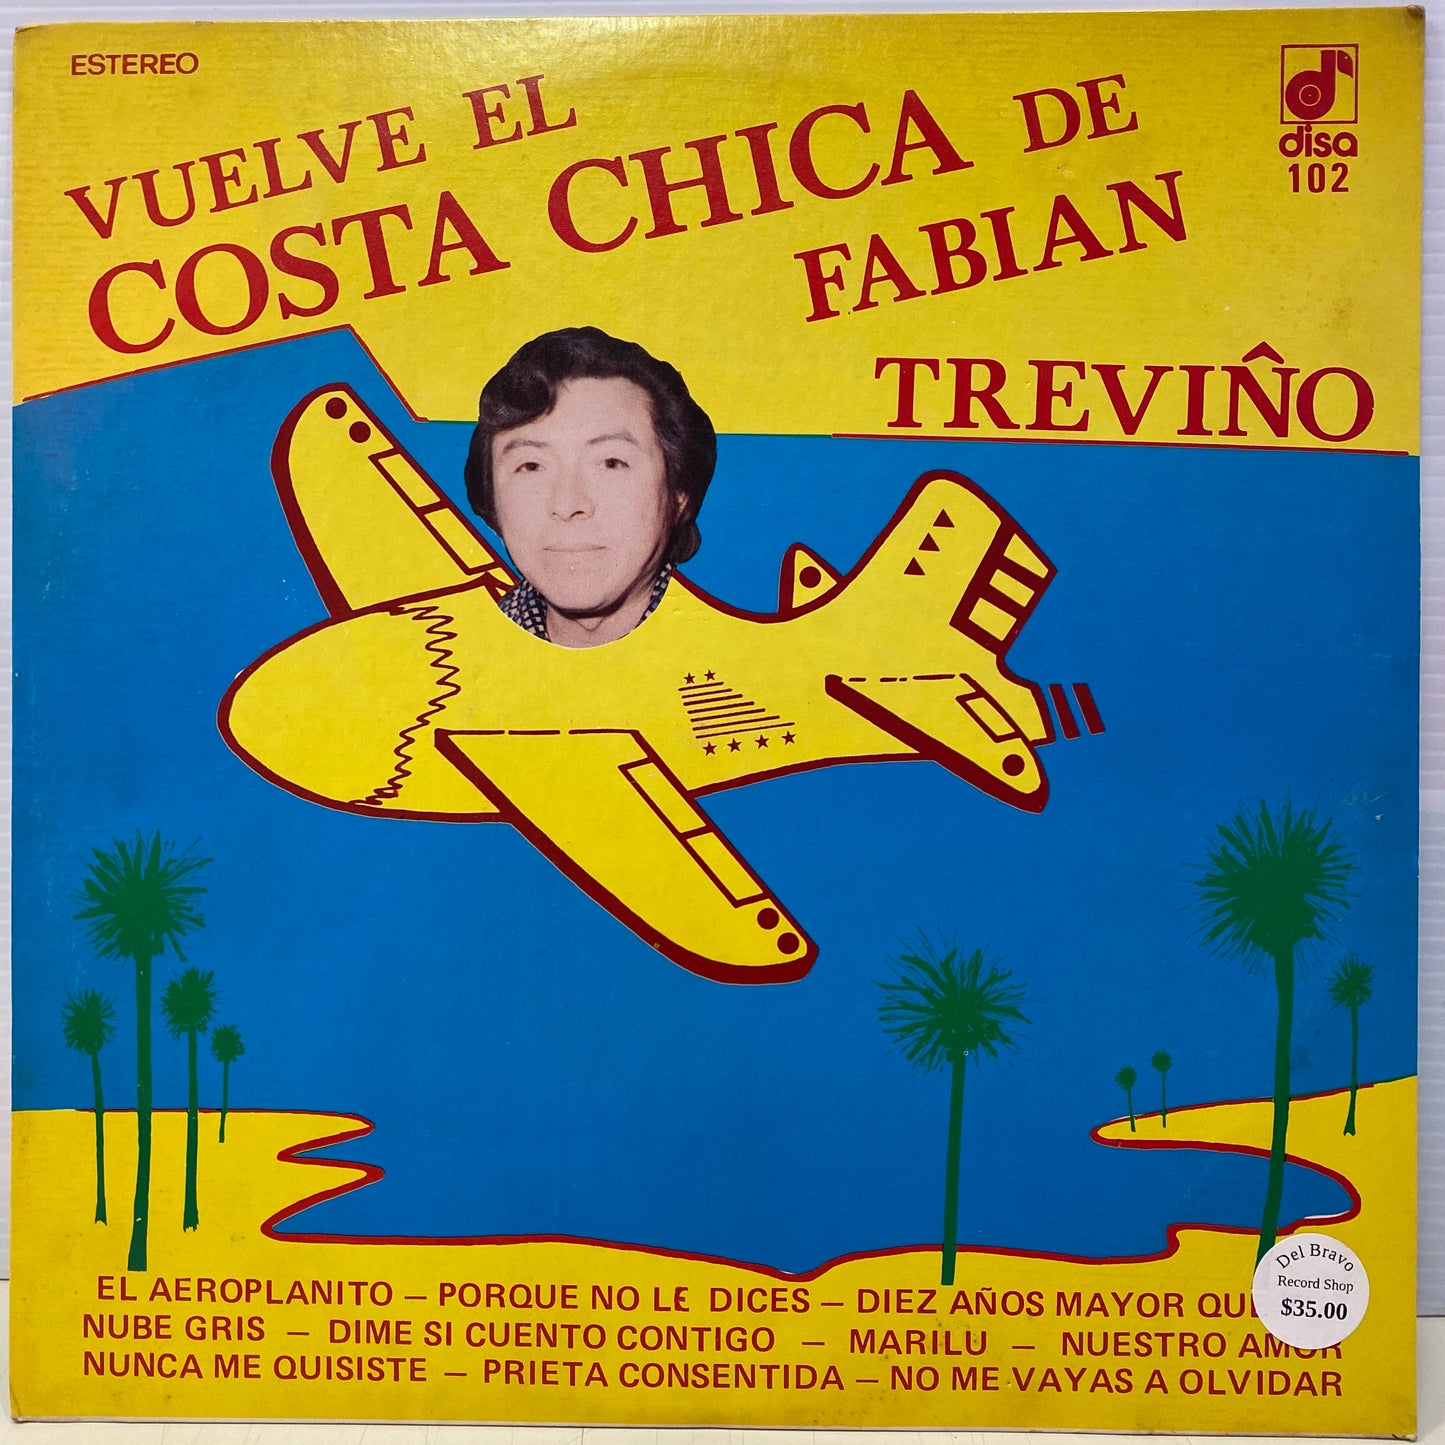 Vuelve El Costa Chice de Fabian Trevino  (Open Vinyl)